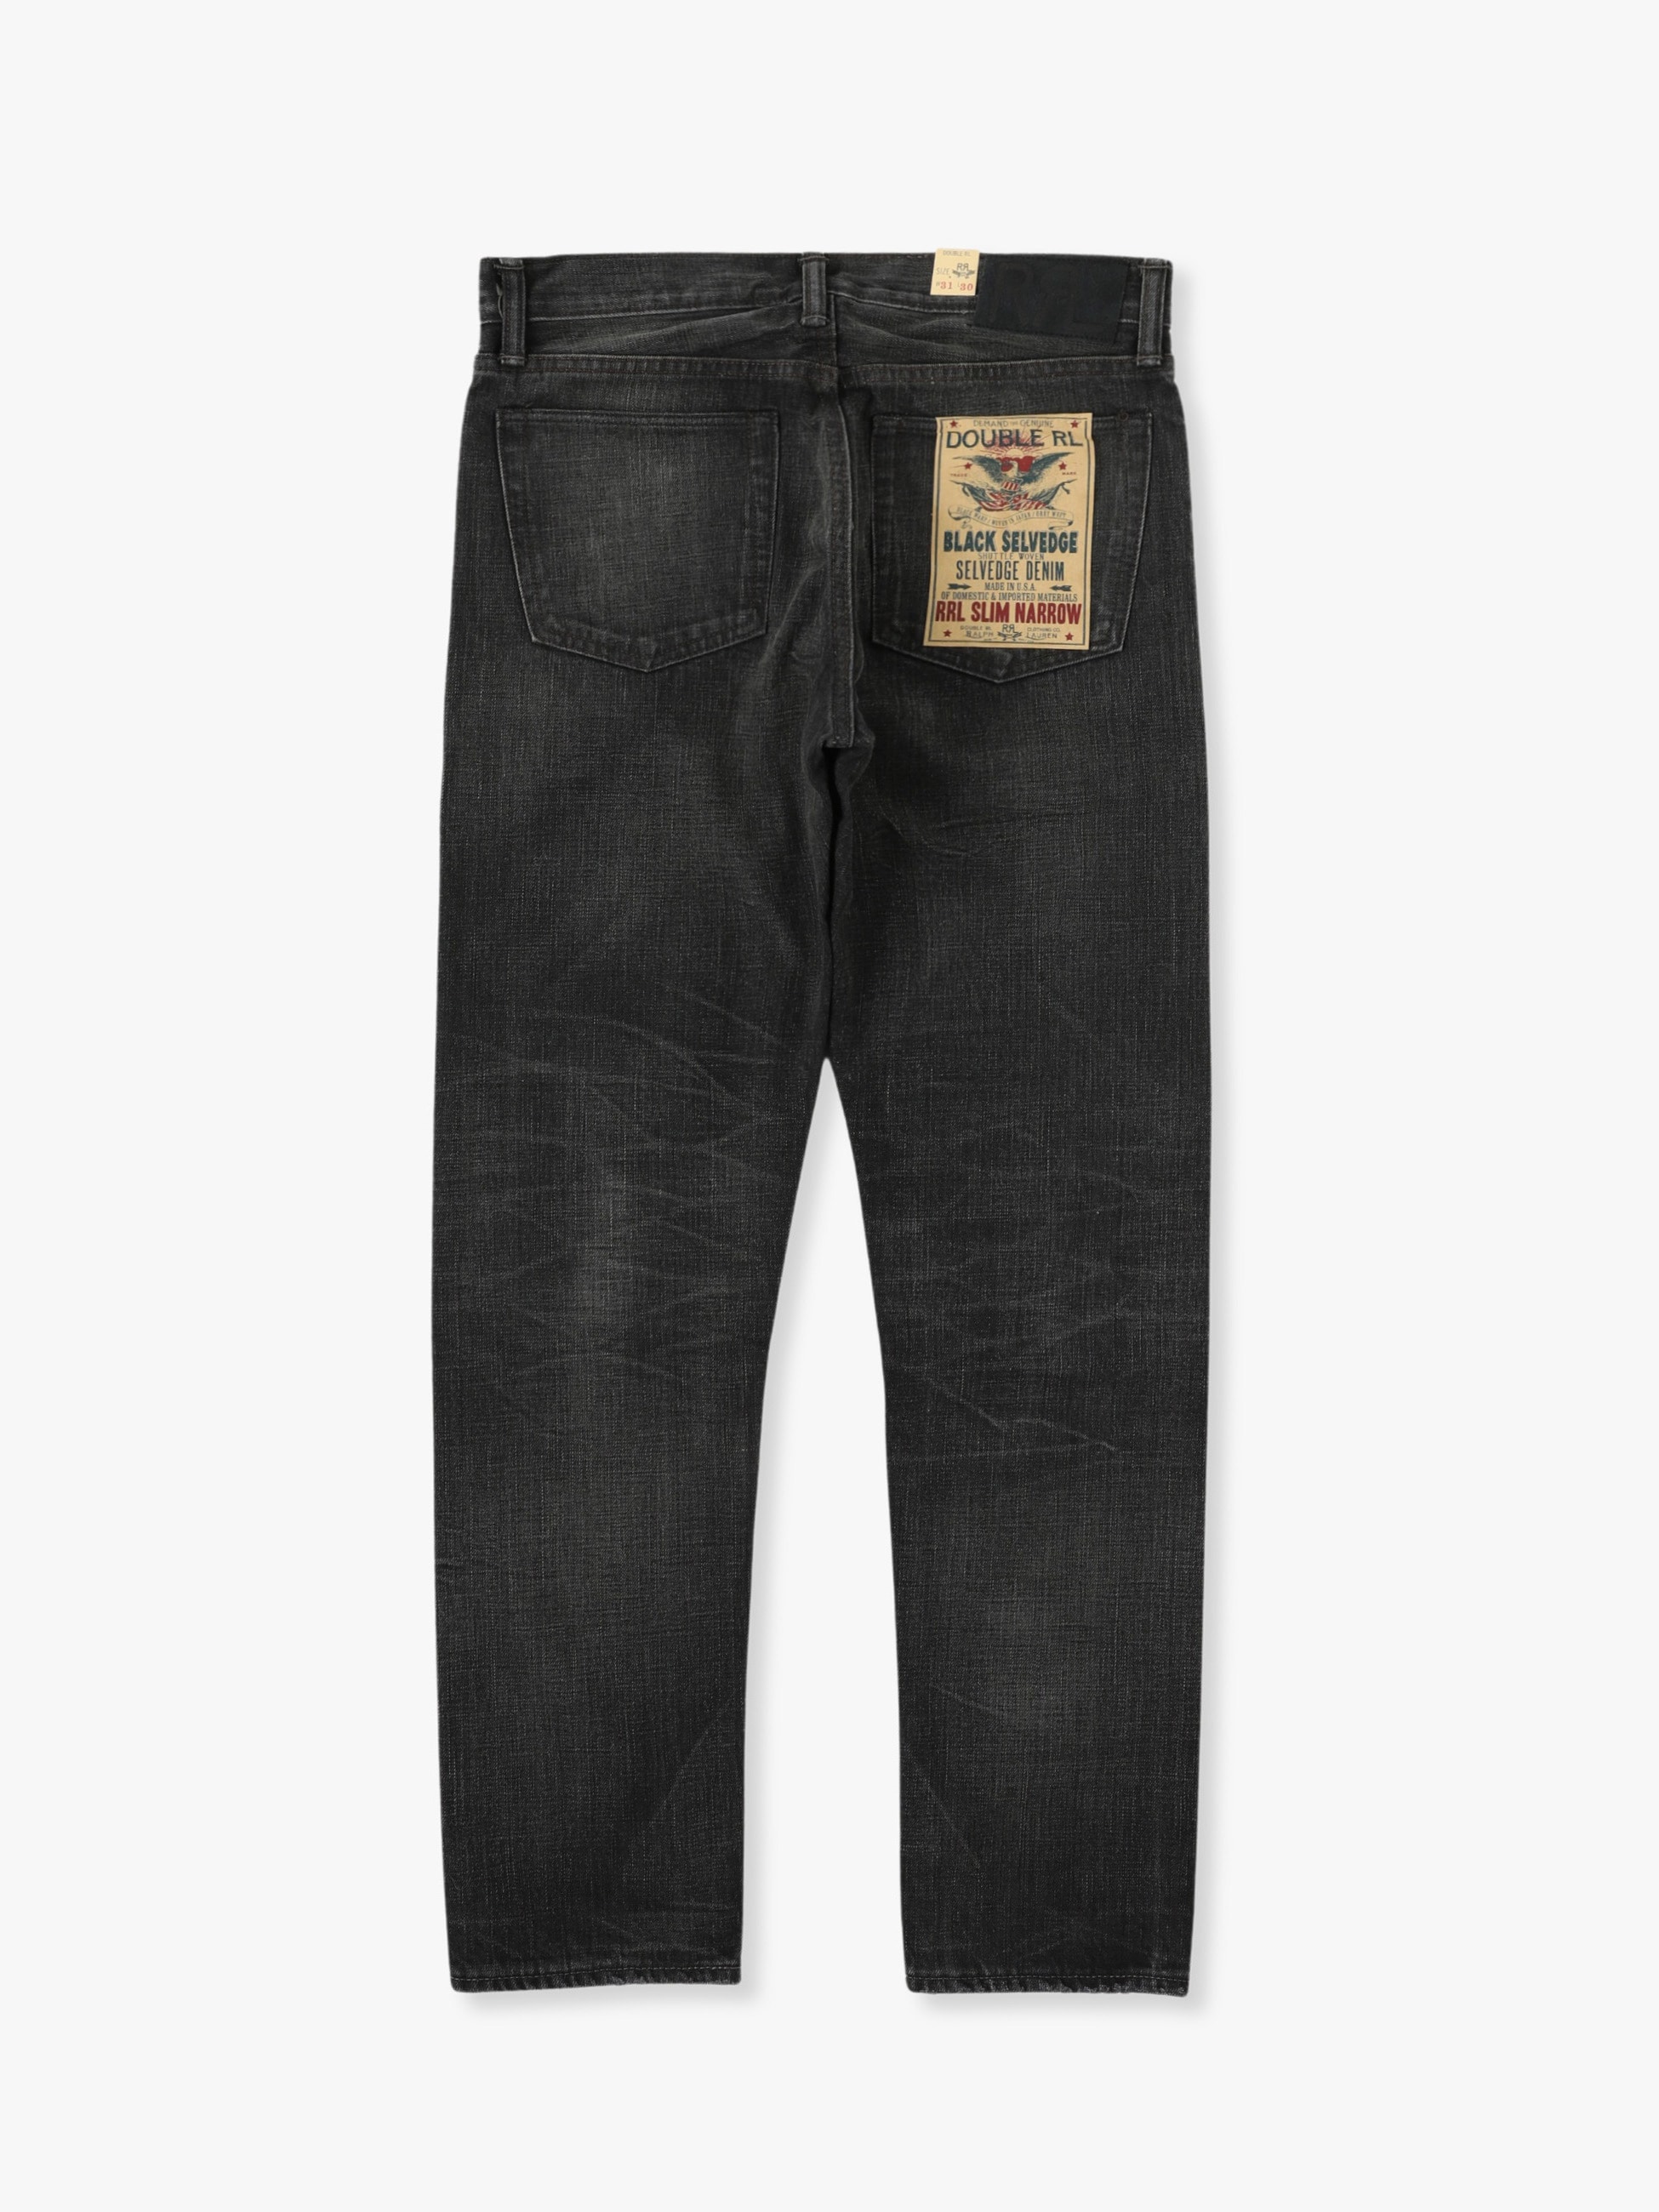 RRL Slim Fit Black Selvedge Jeans 29×32 | uvastartuphub.com